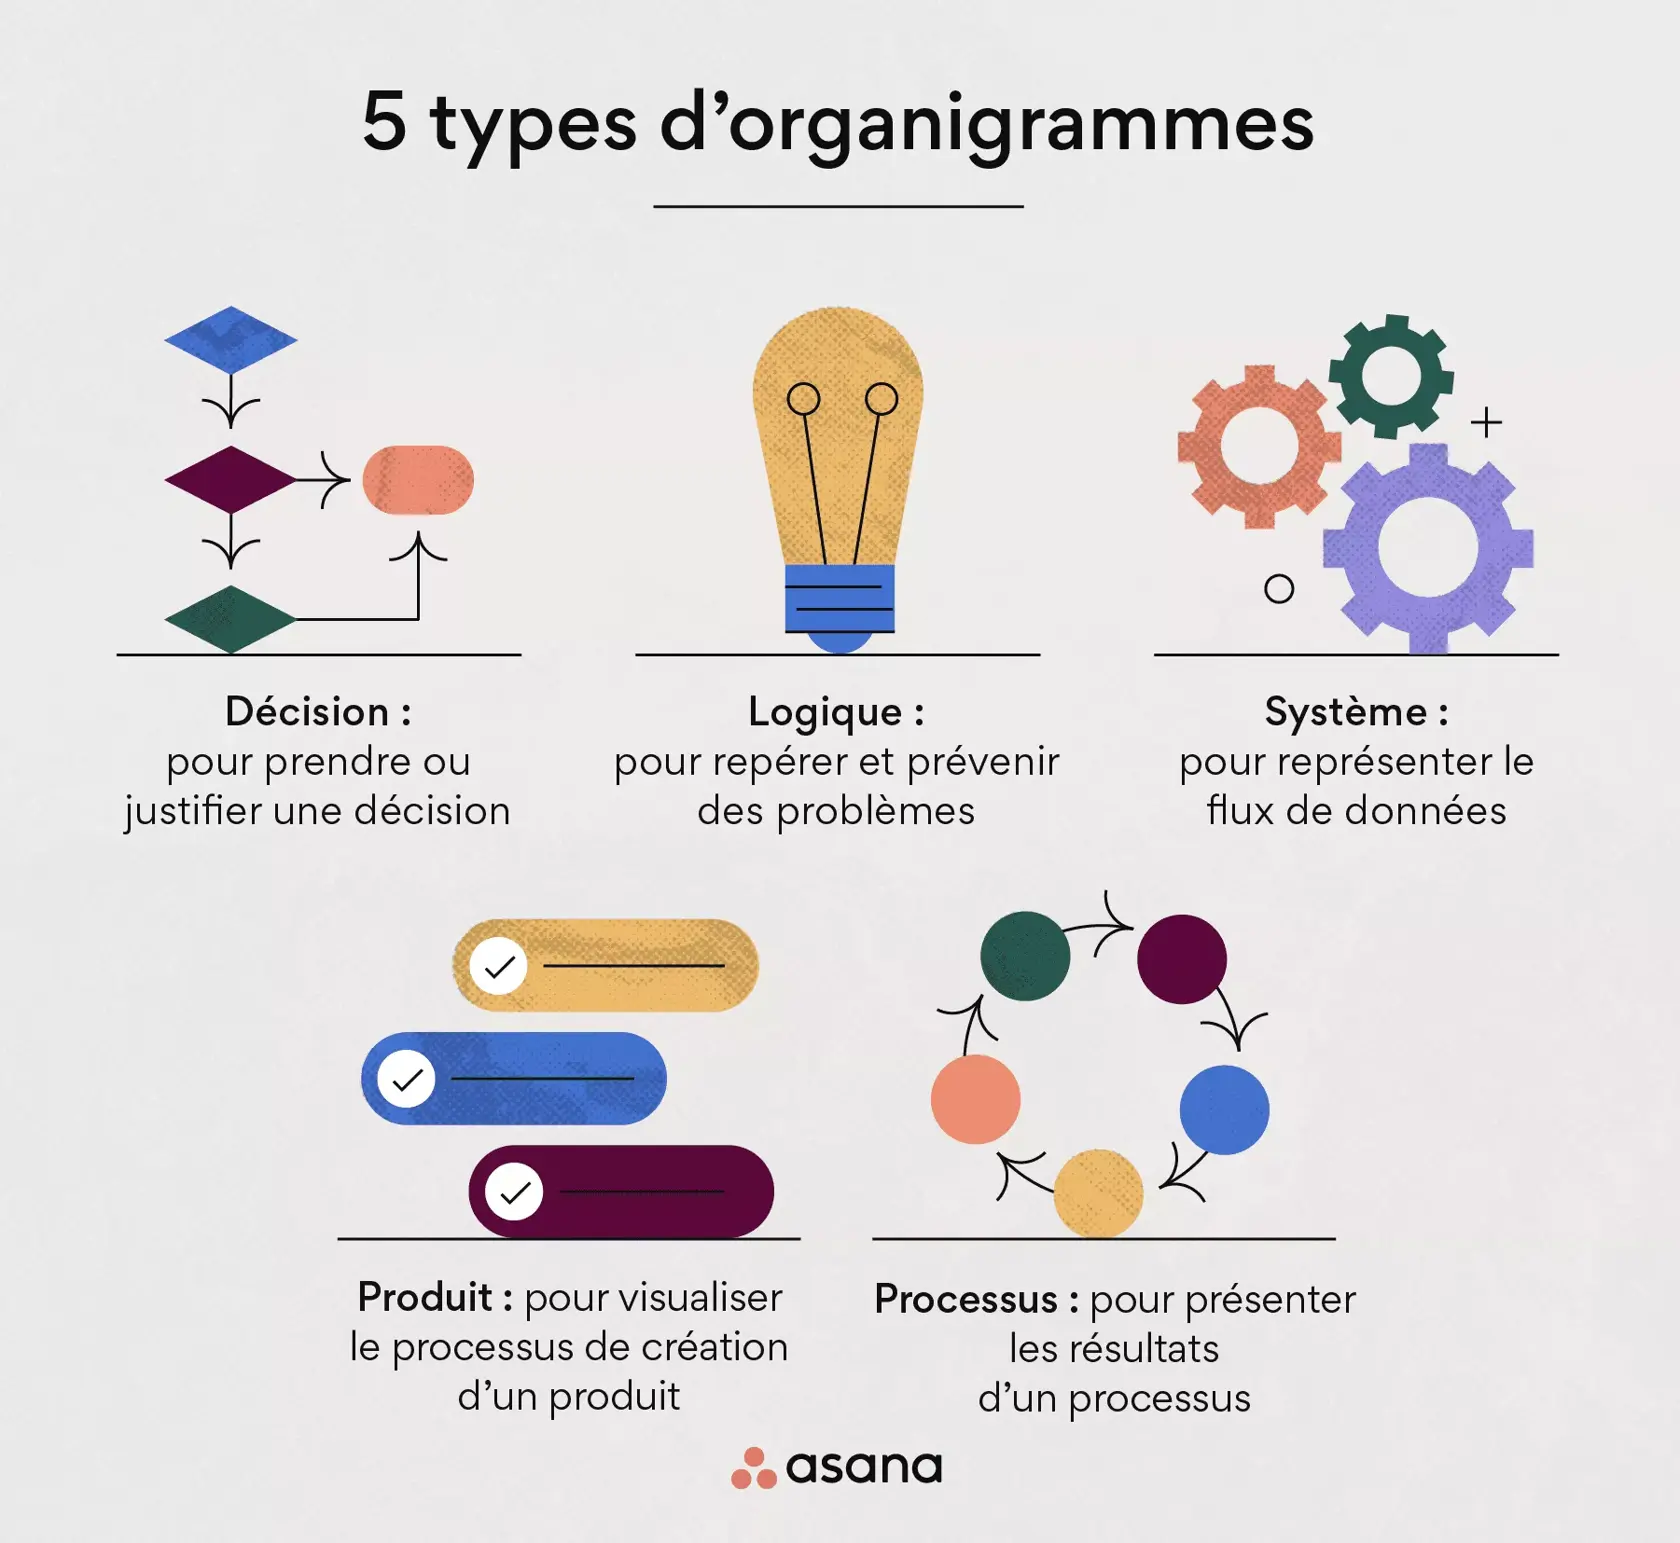 Les différents types d’organigrammes